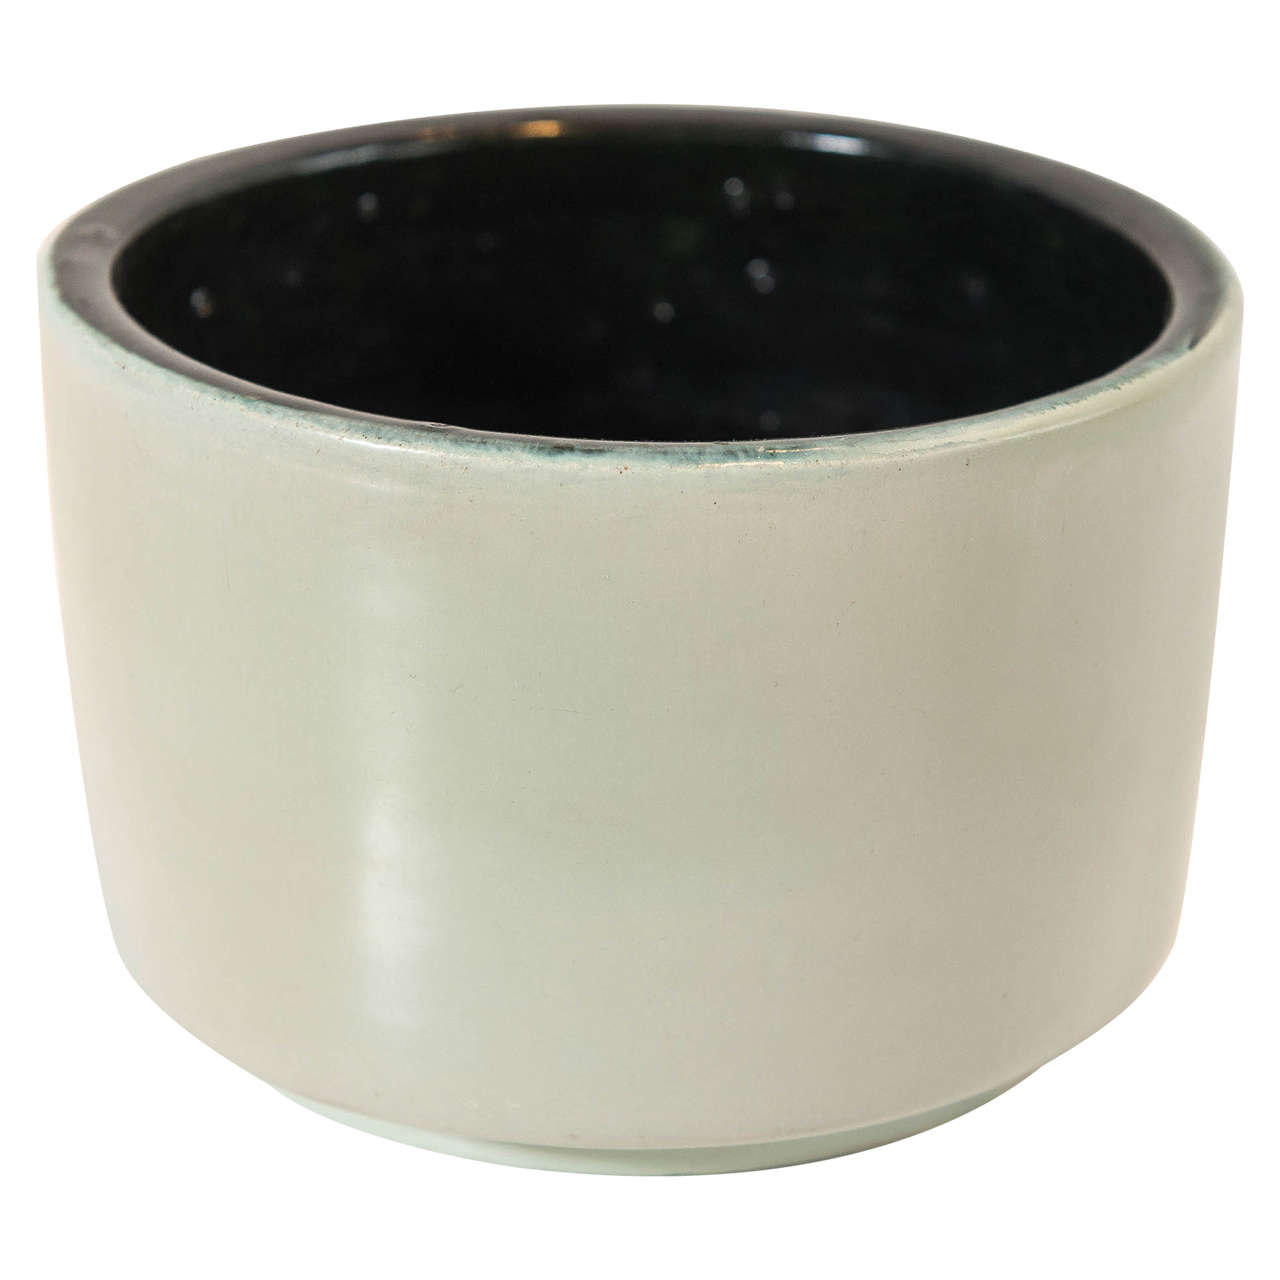 Georges JOUVE Glazed Ceramic Pot For Sale